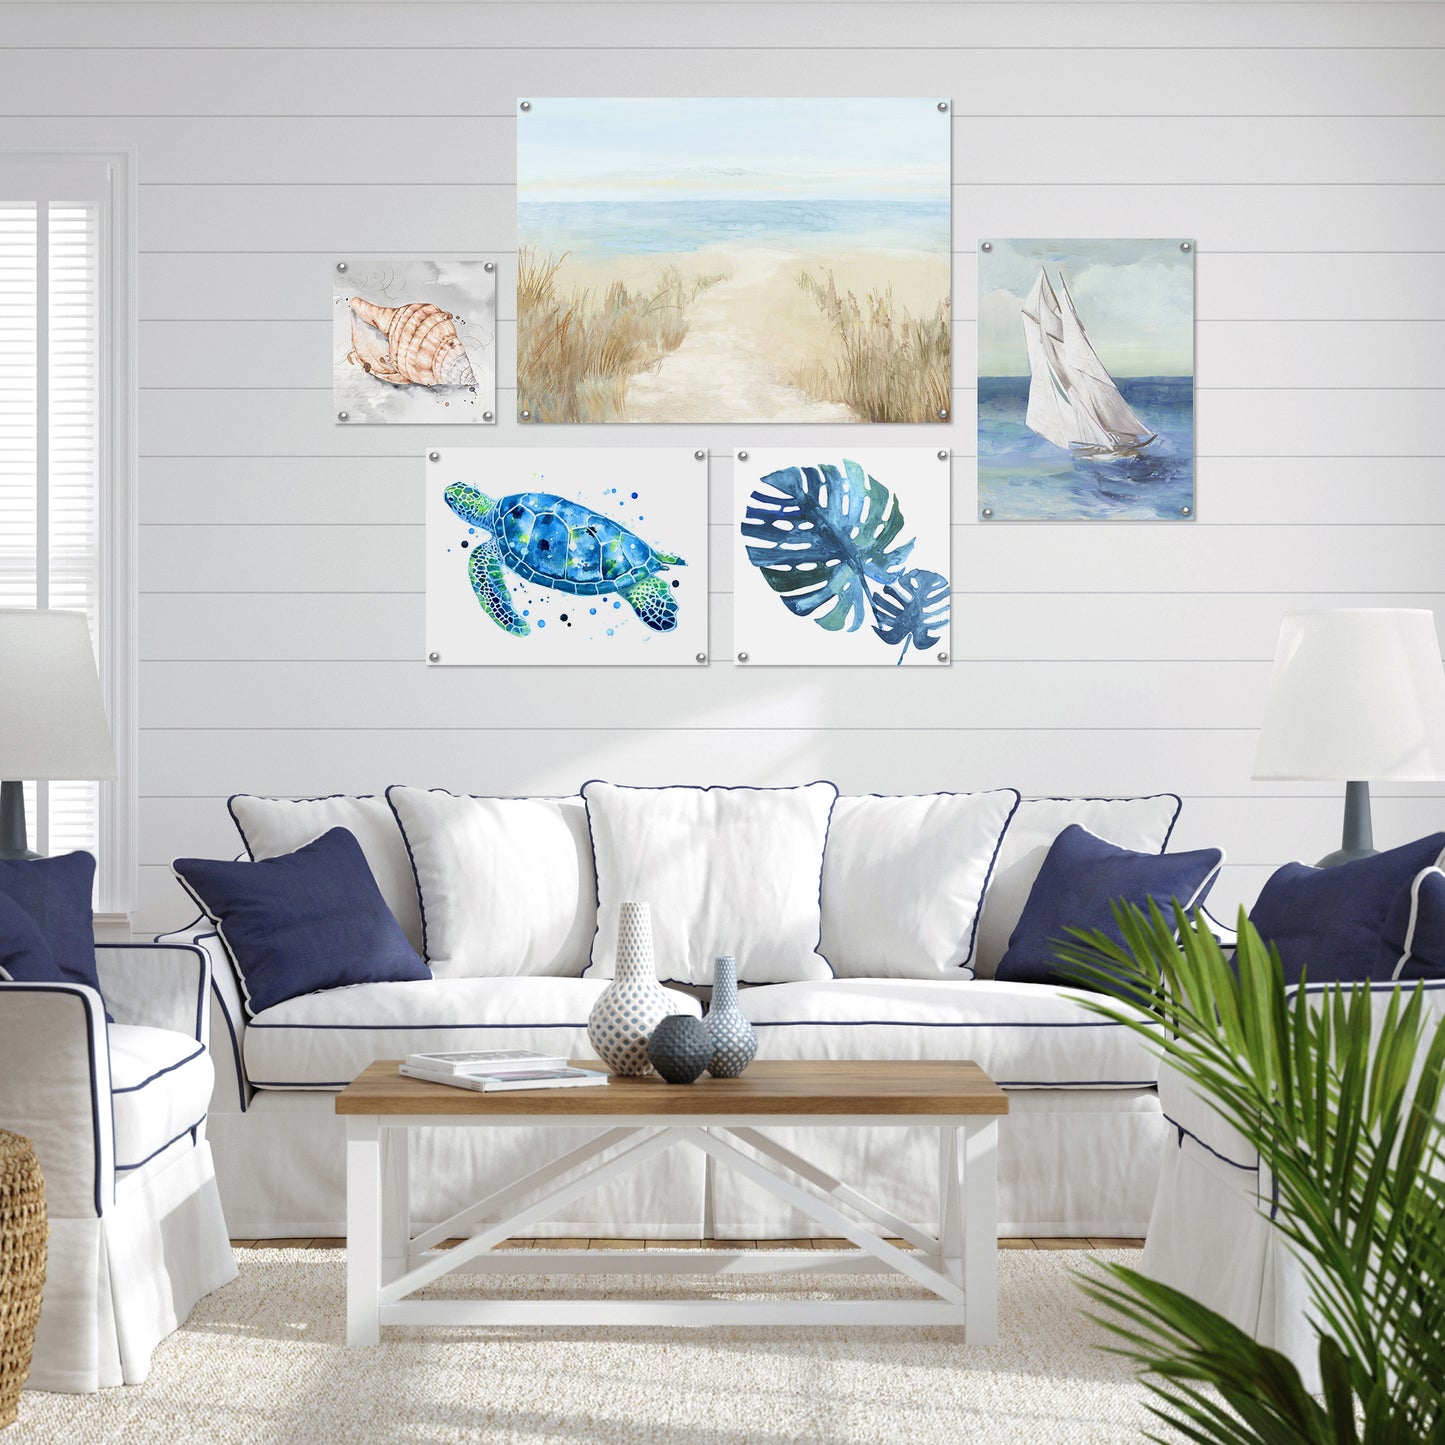 5 Piece Poster Gallery Wall Art Set - Blue Coastal Nature Sailing - Print